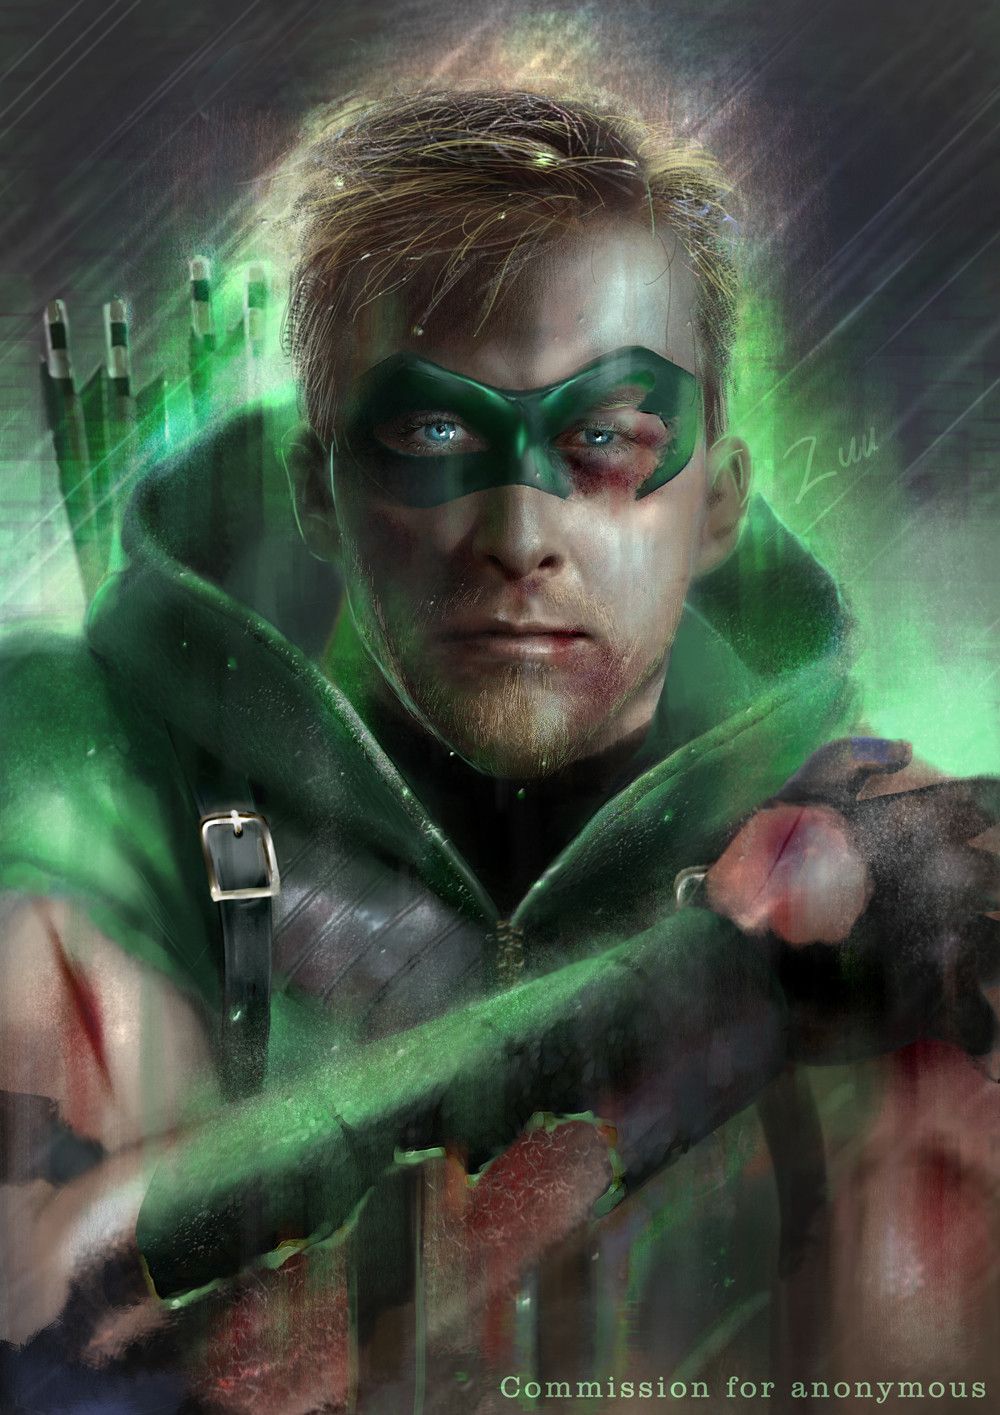 Ryan Gosling as Green Arrow